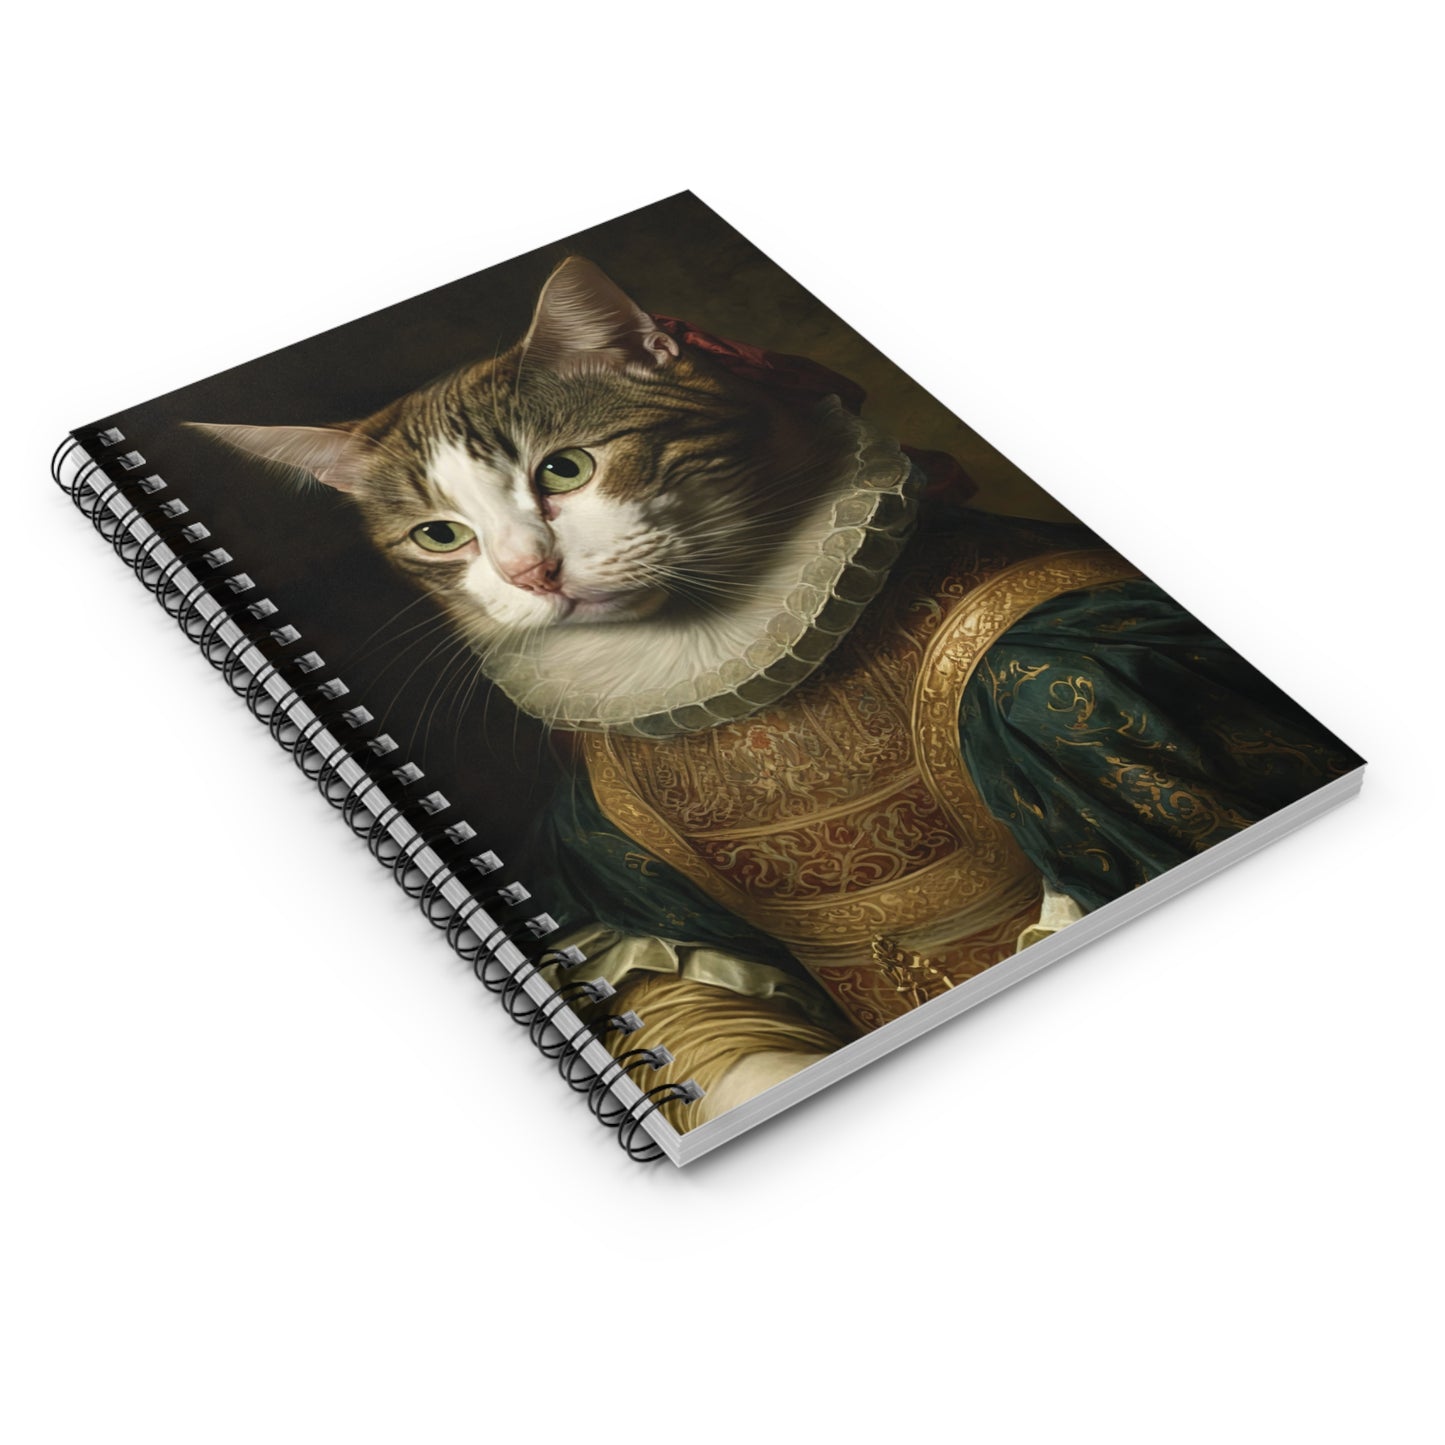 Cat Aristocrat | Spiral Notebook - Ruled Line